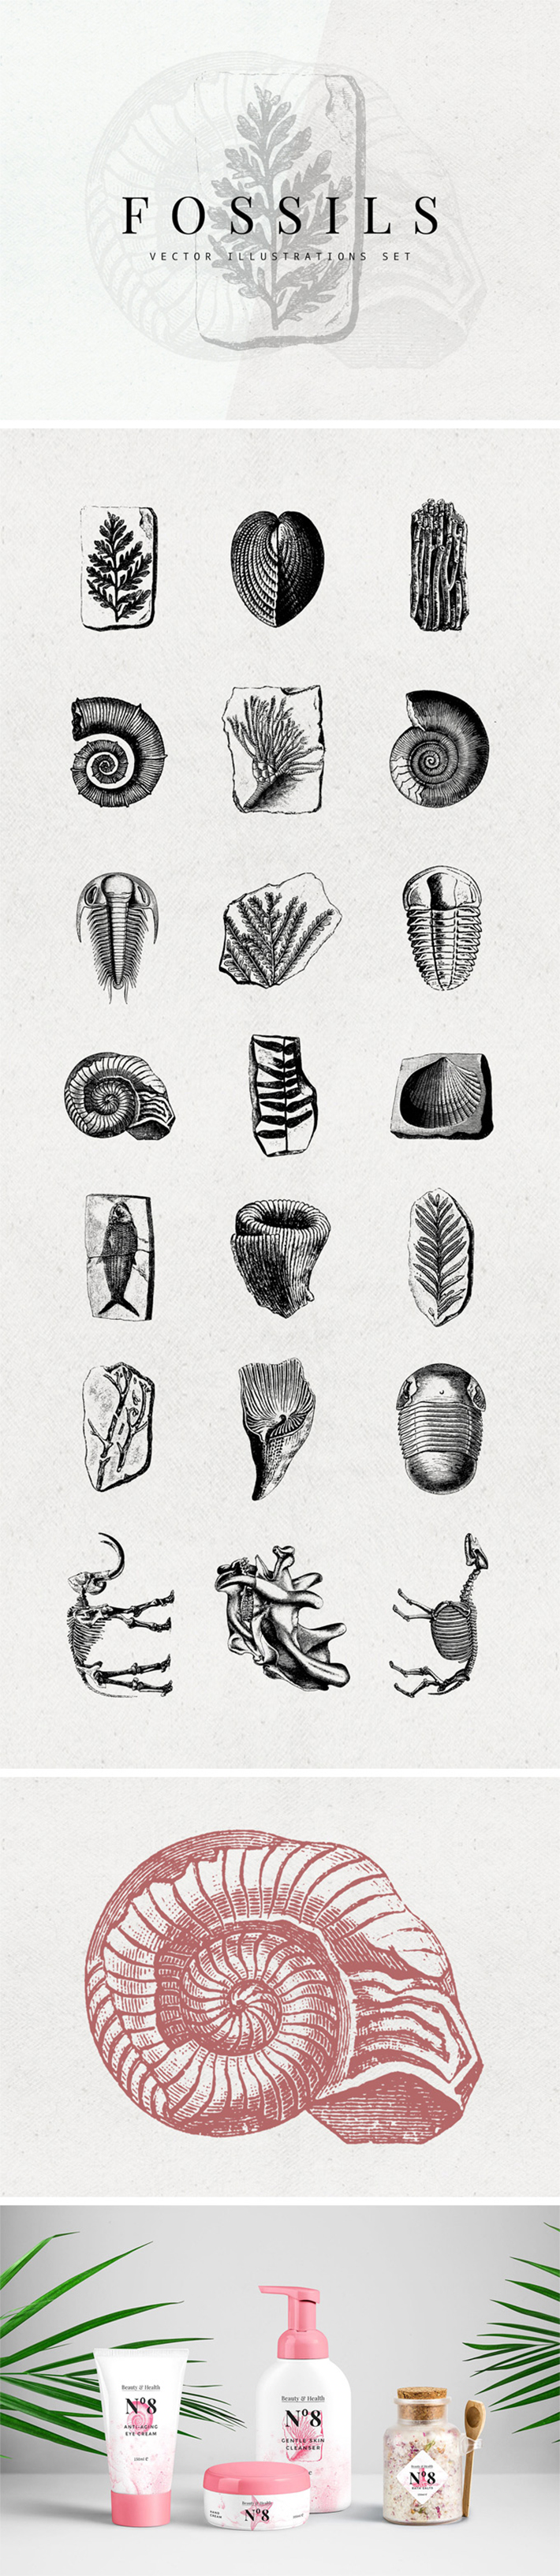 Fossils Vectorized Illustrations Set